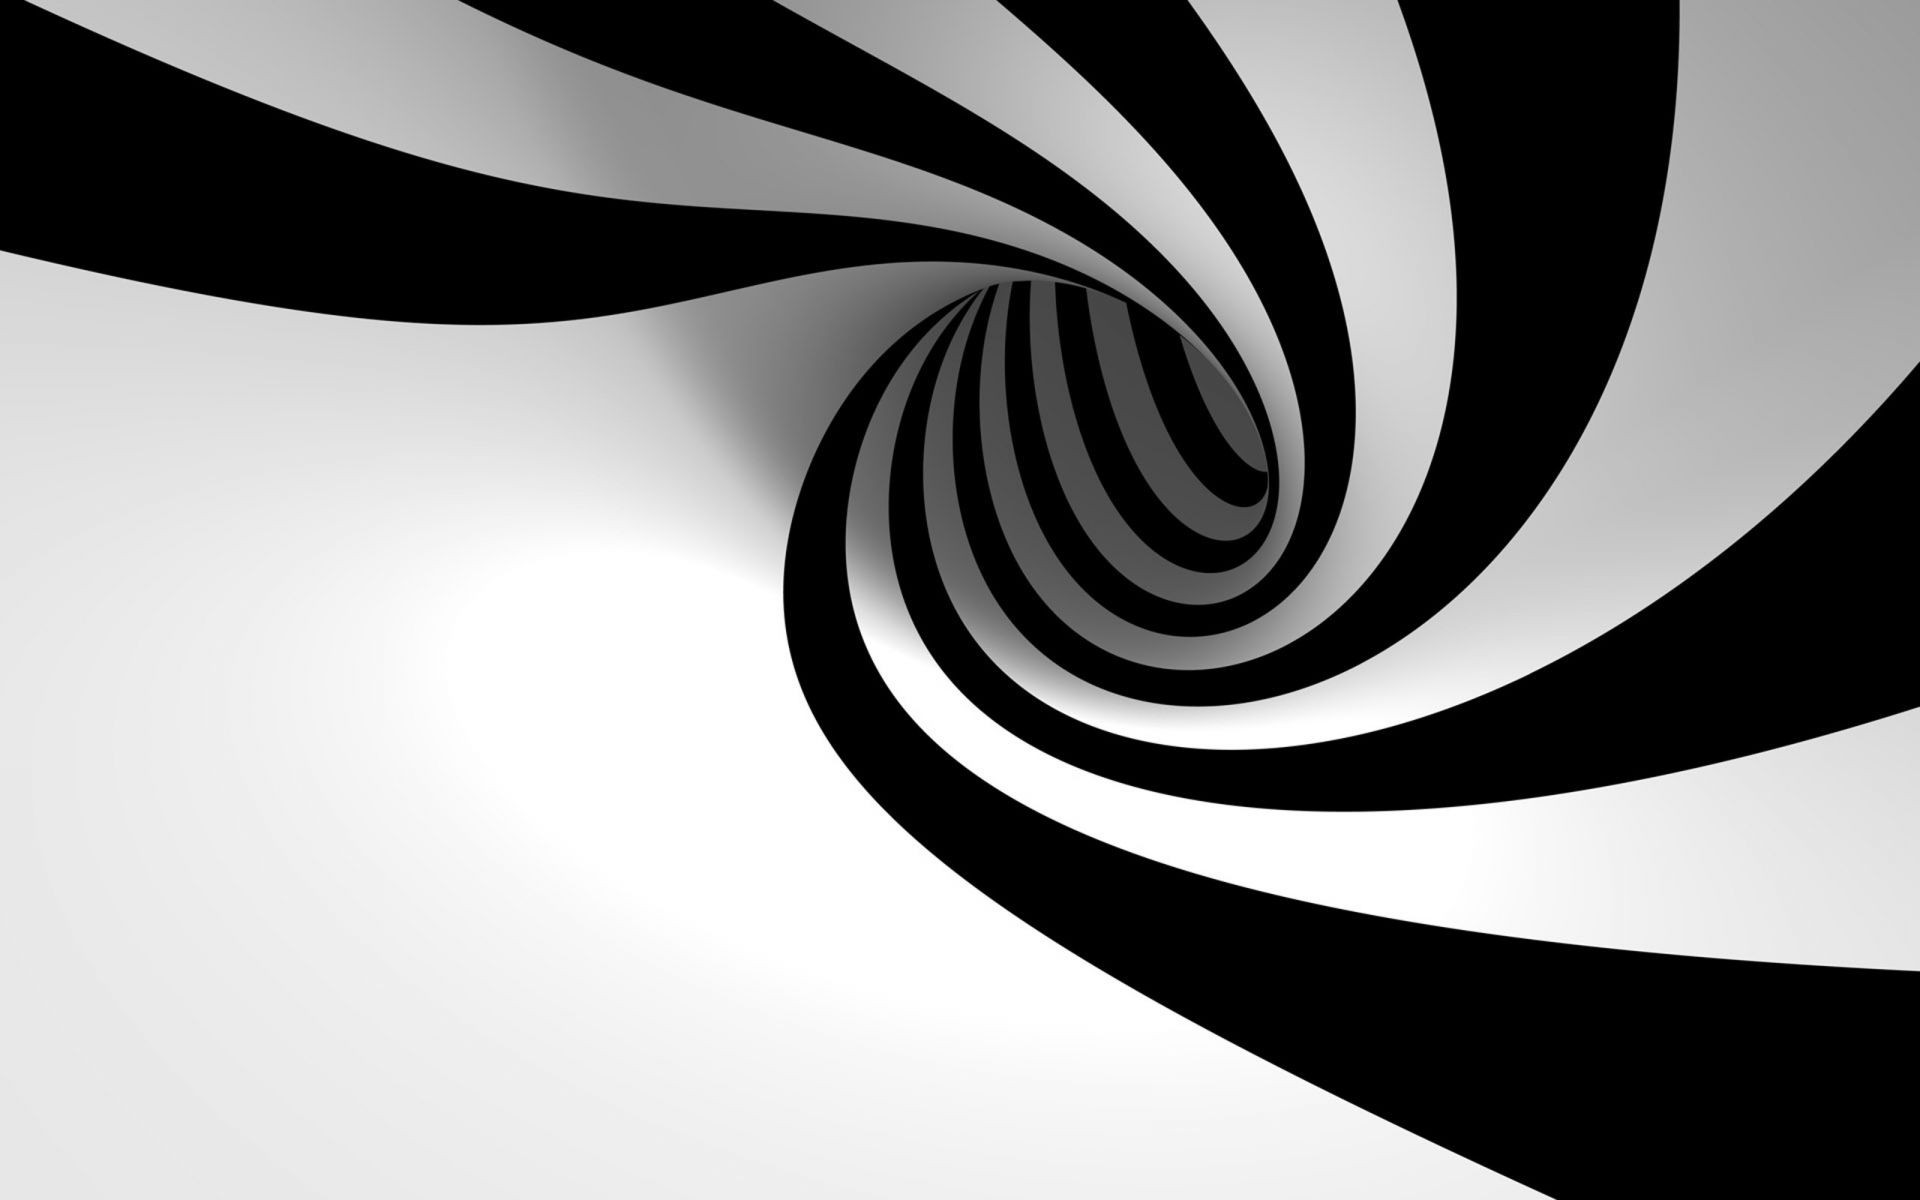 abstract art graphic pattern design illustration curve line desktop vortex style futuristic vector geometric wave spiral shape artistic